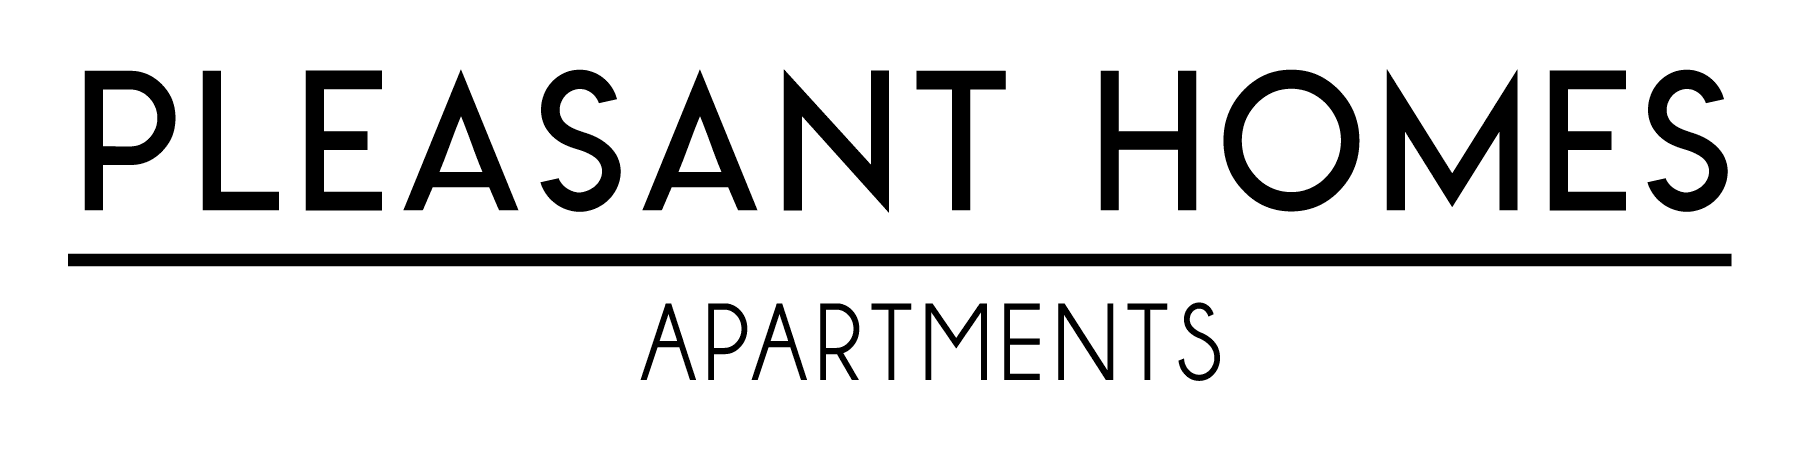 Pleasant Homes Apartments